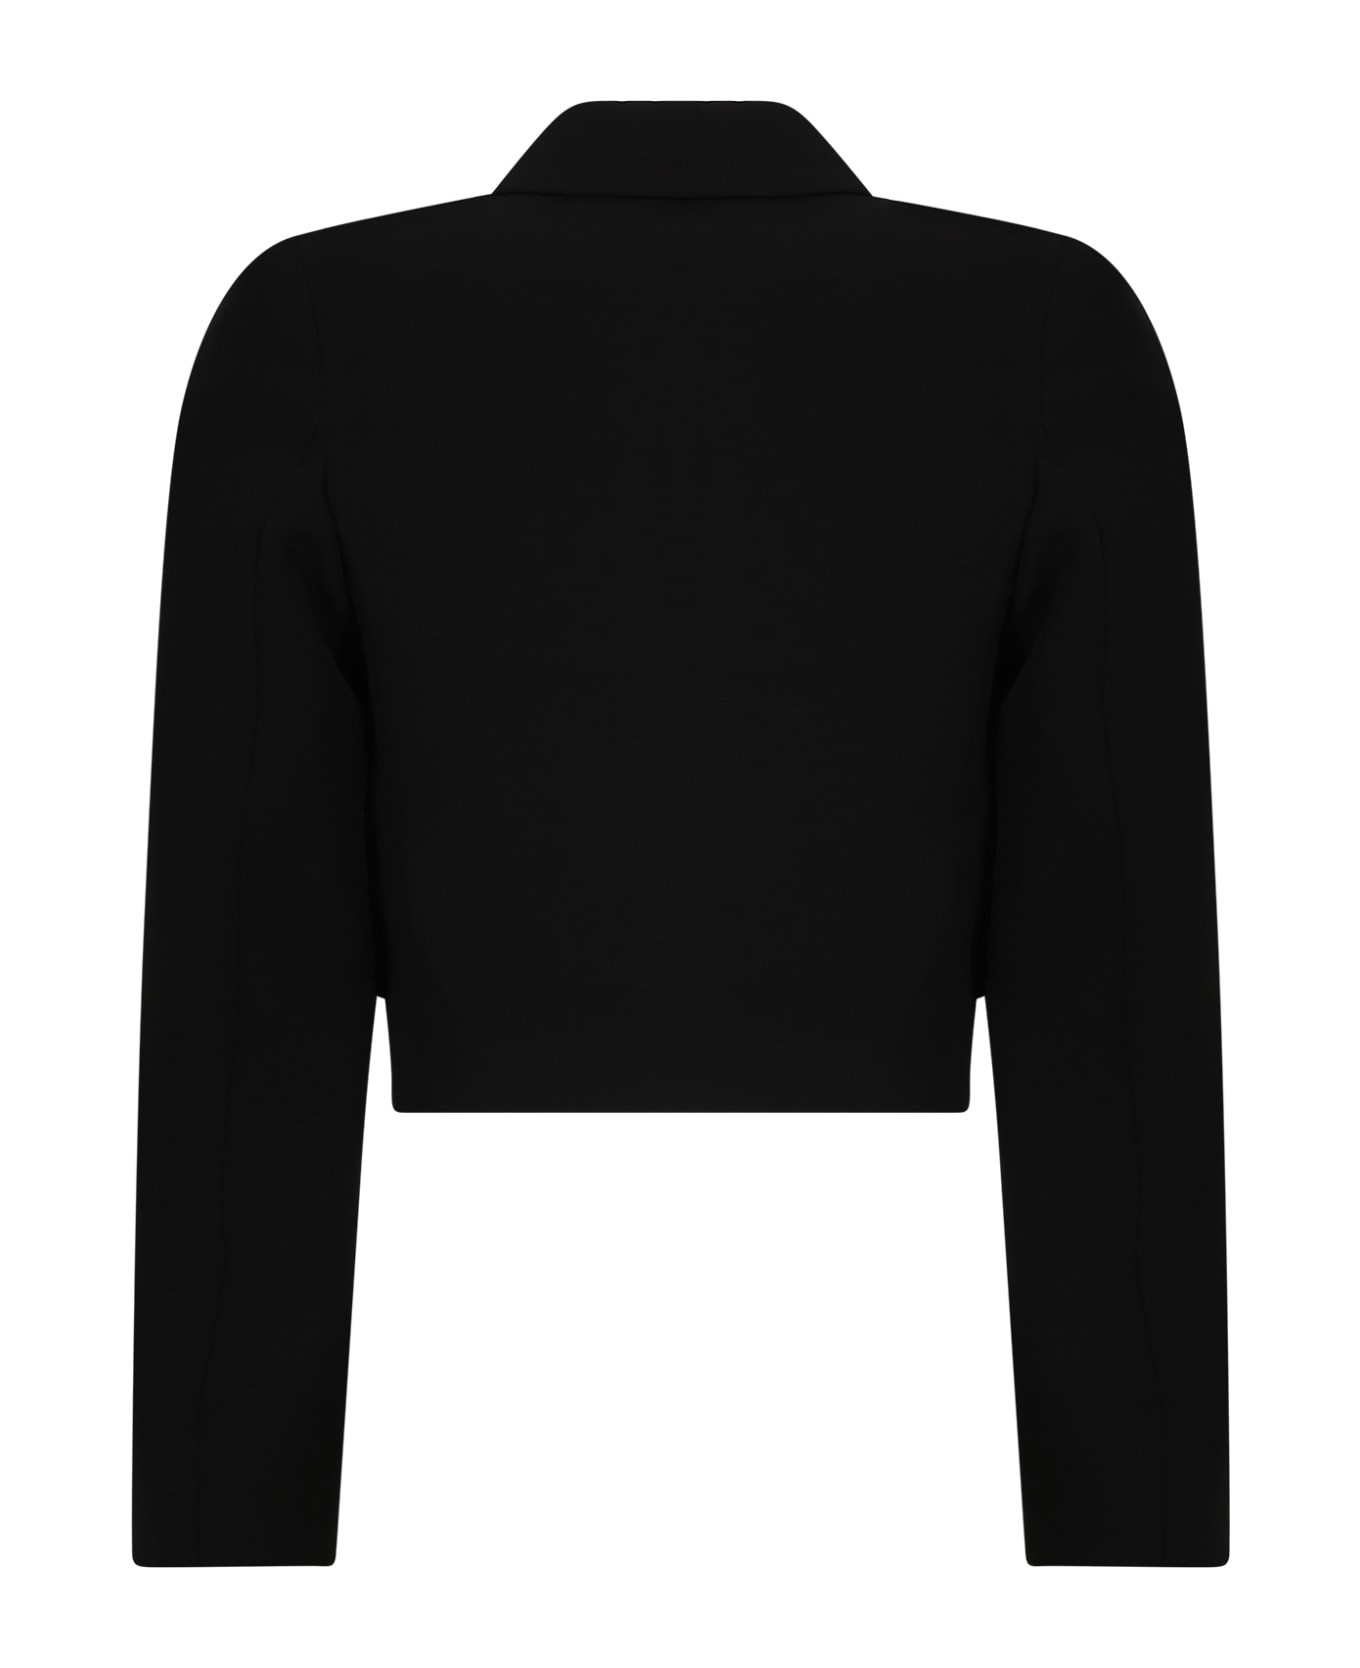 MSGM Black Jacket For Girl With Logo - Black